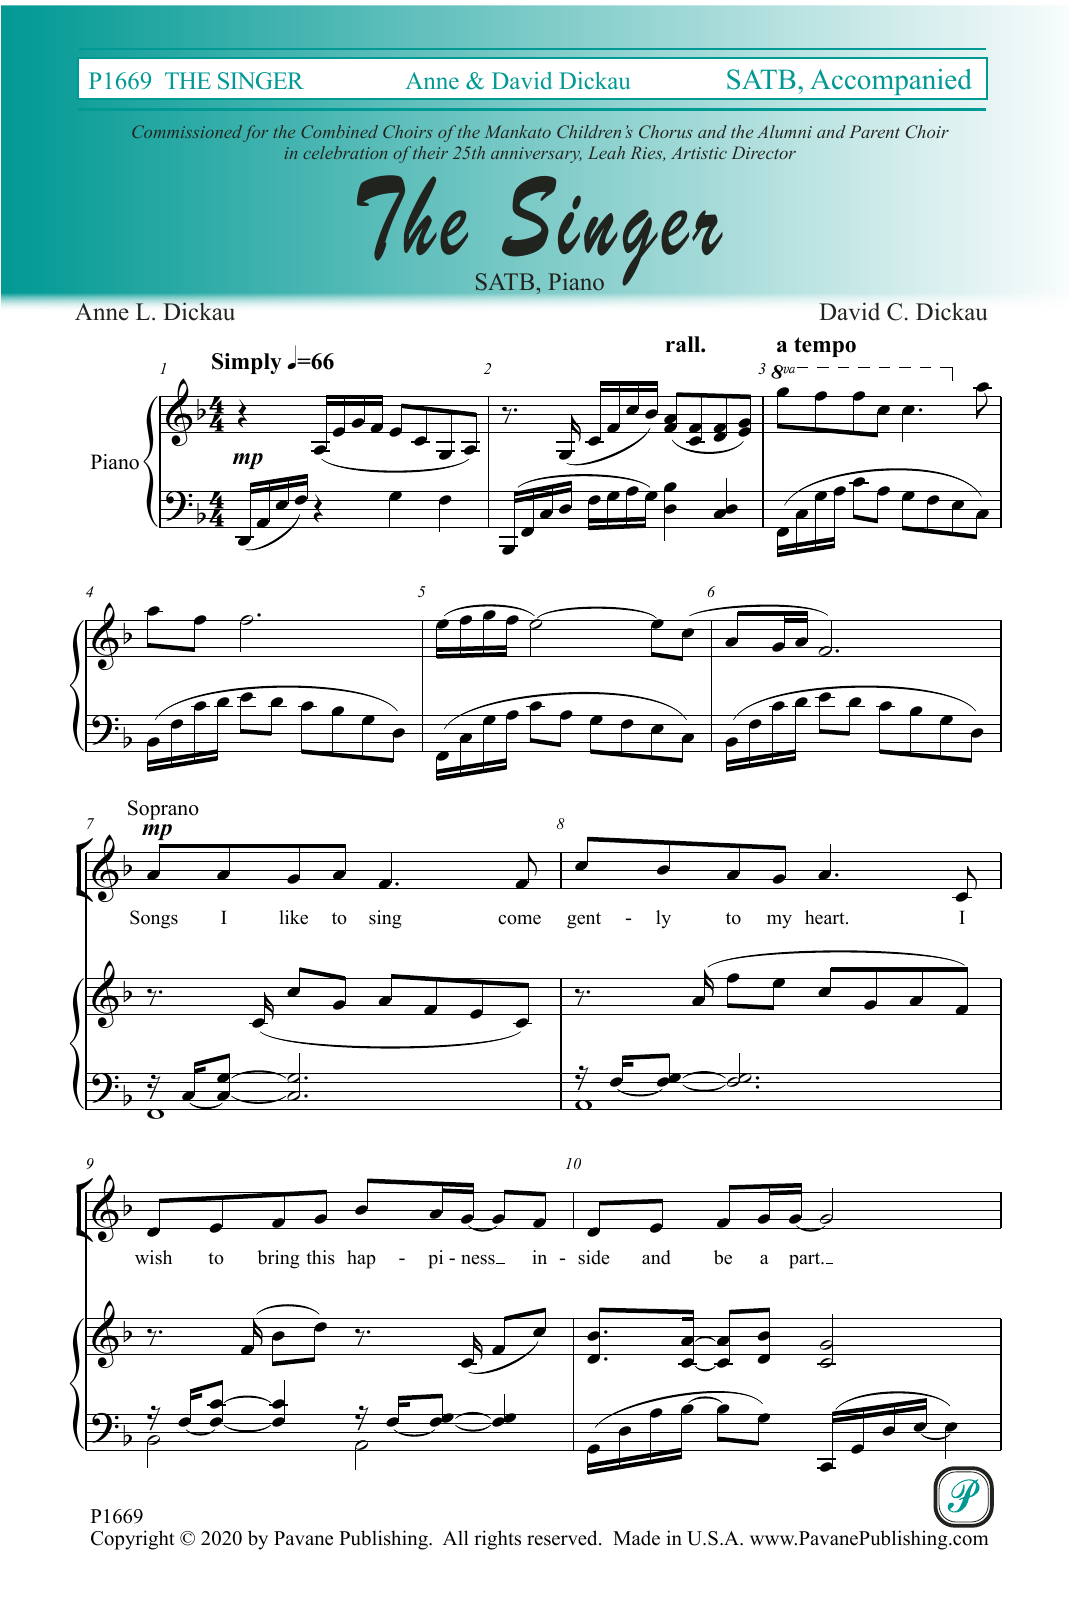 David C. Dickau The Singer Sheet Music Notes & Chords for SATB Choir - Download or Print PDF